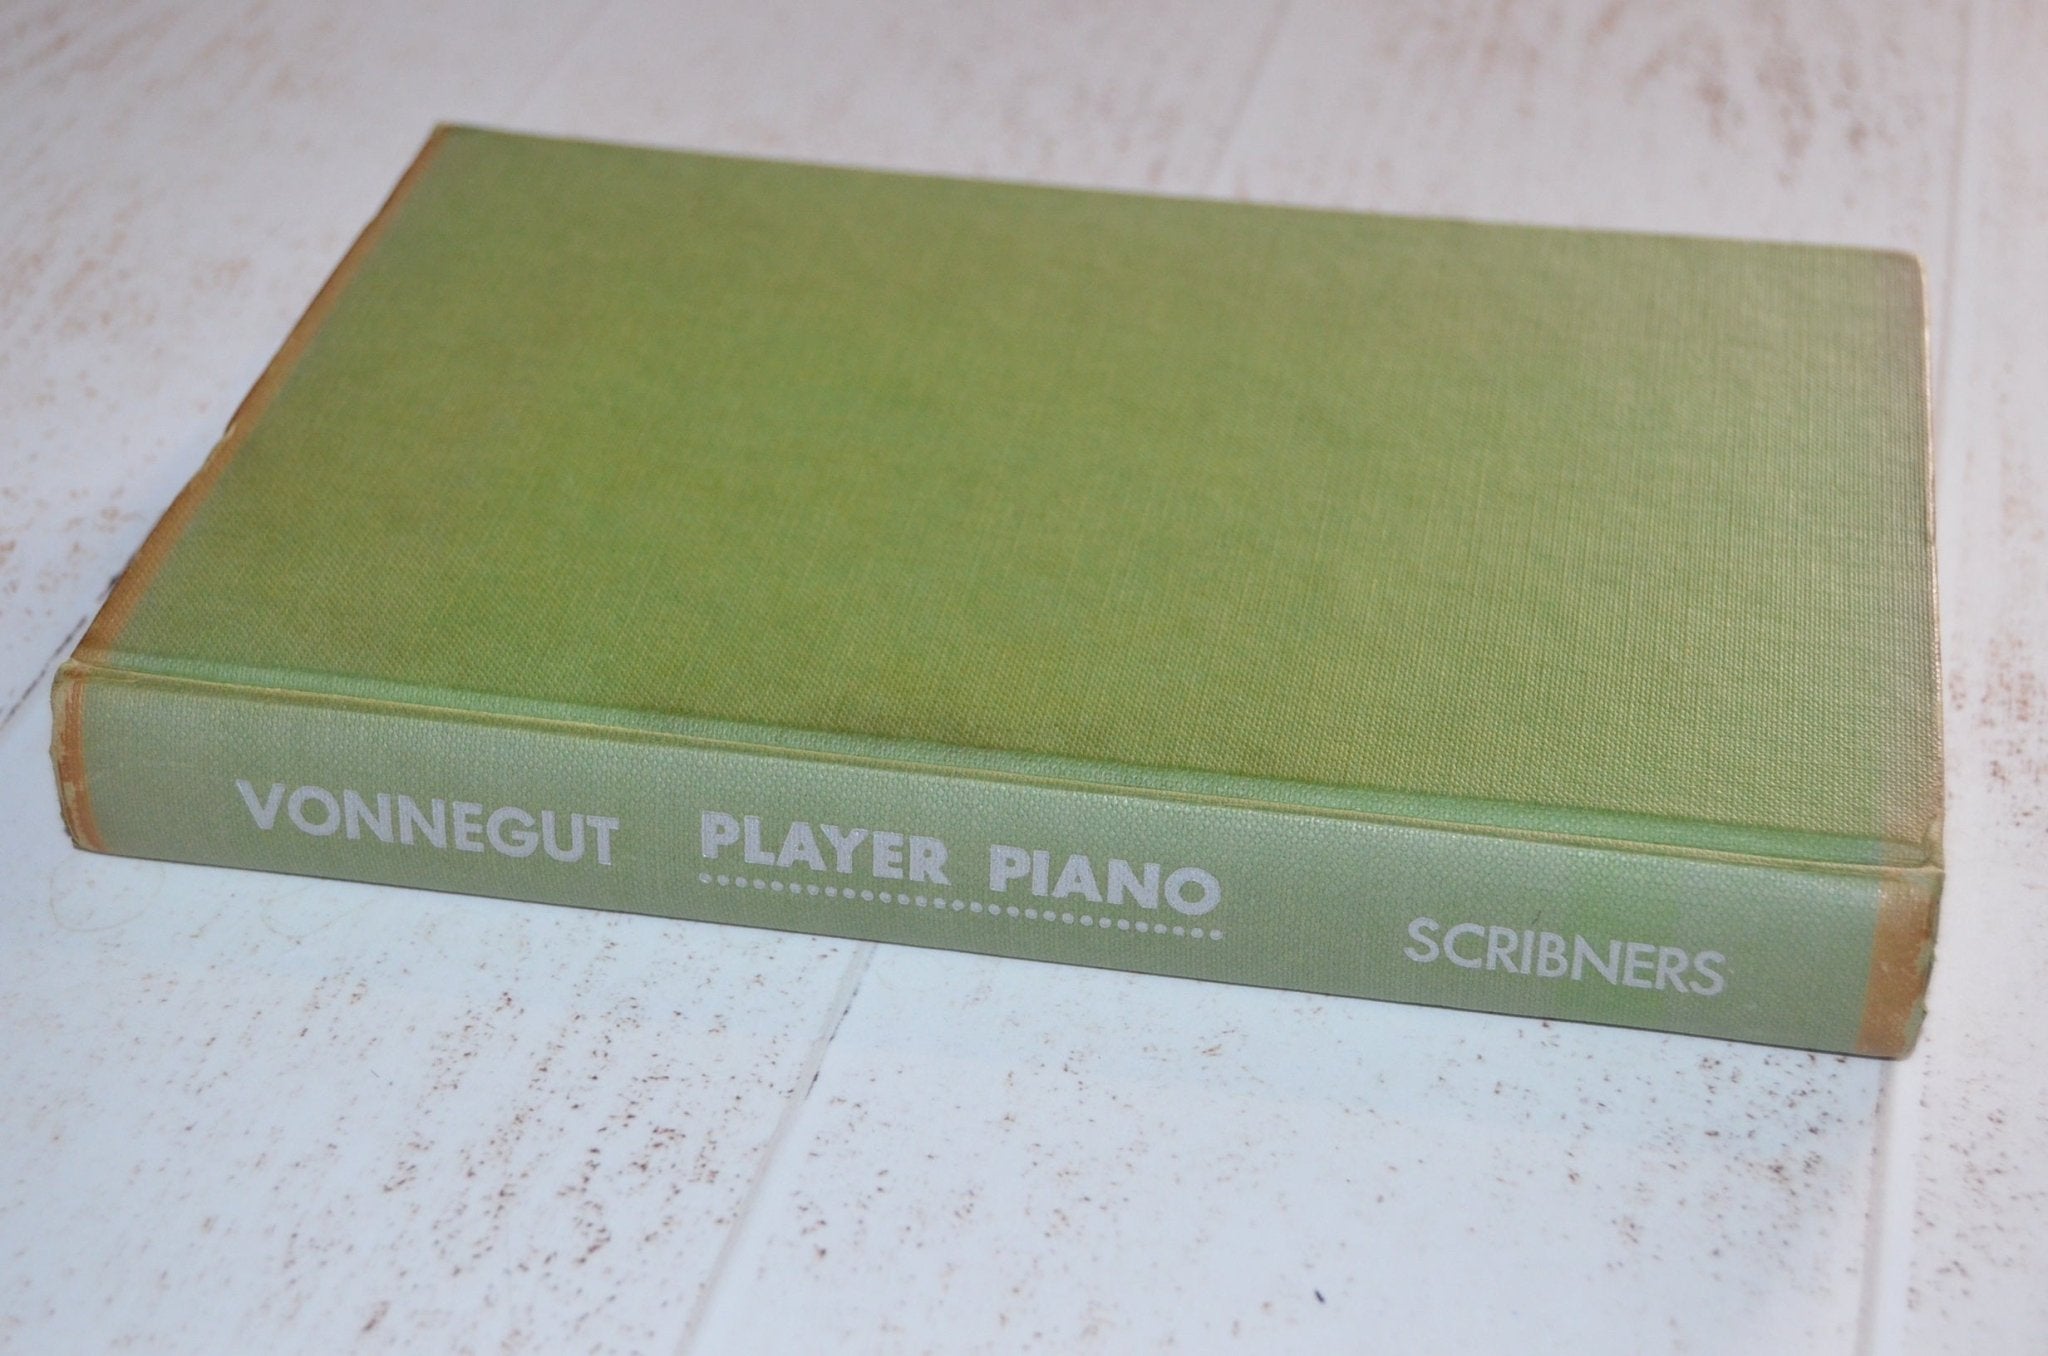 First Edition First Printing – Player Piano by Kurt Vonnegut 1952 - Brookfield Books